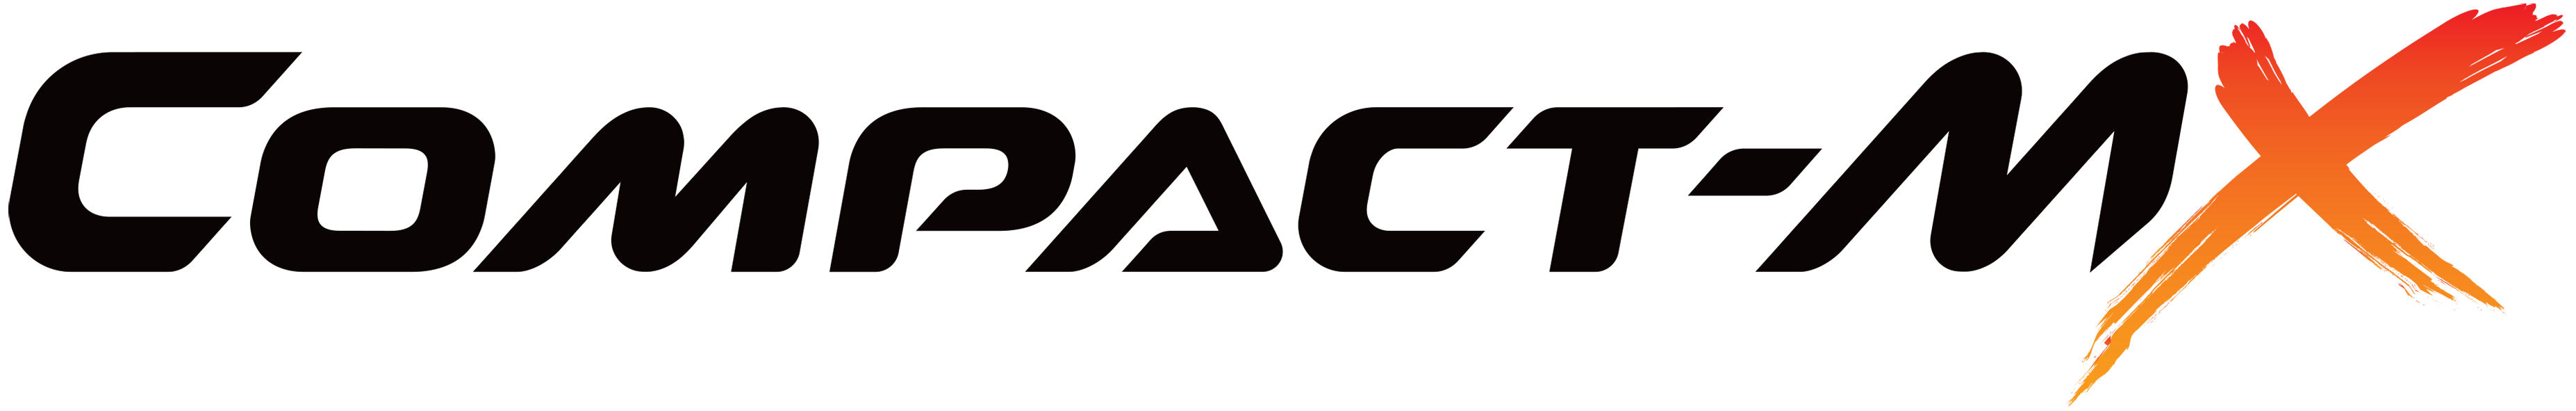 Compact MX Logo Black Letters